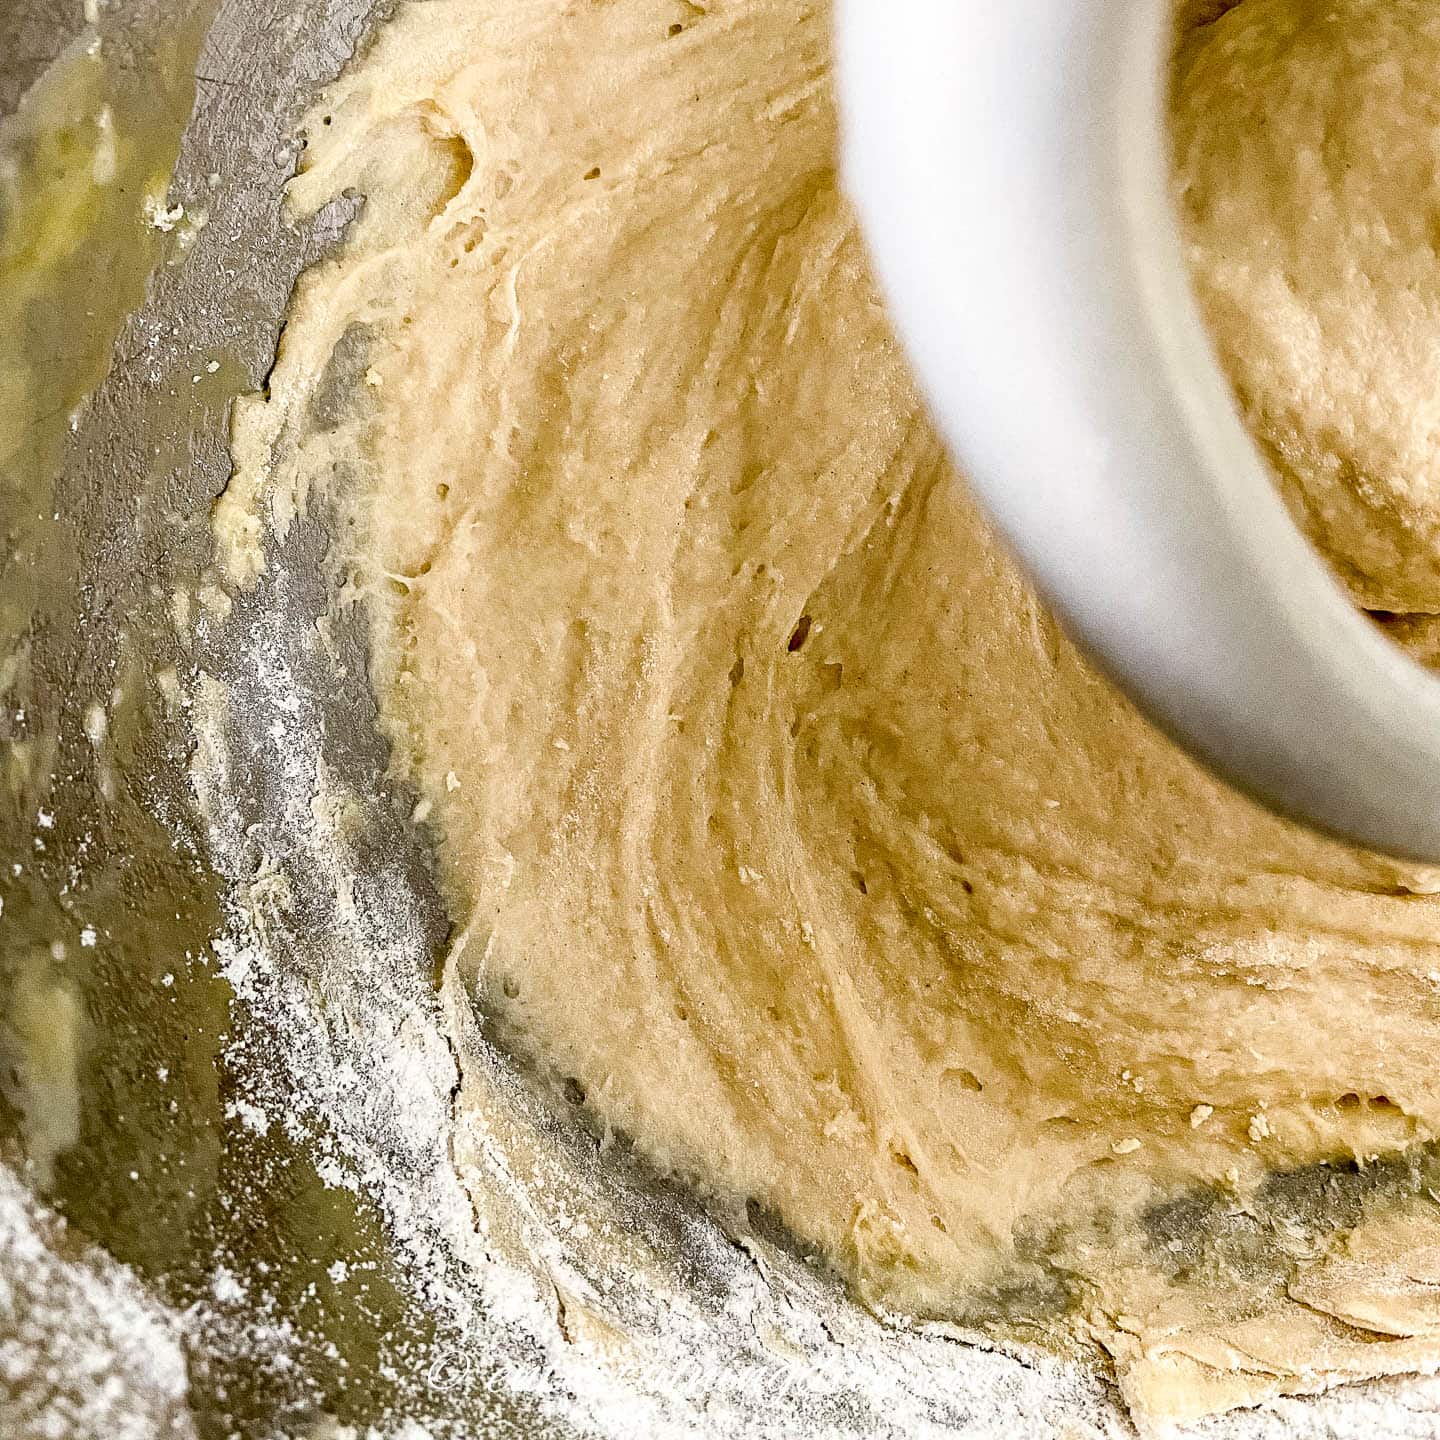 Cinnamon roll dough in a mixer